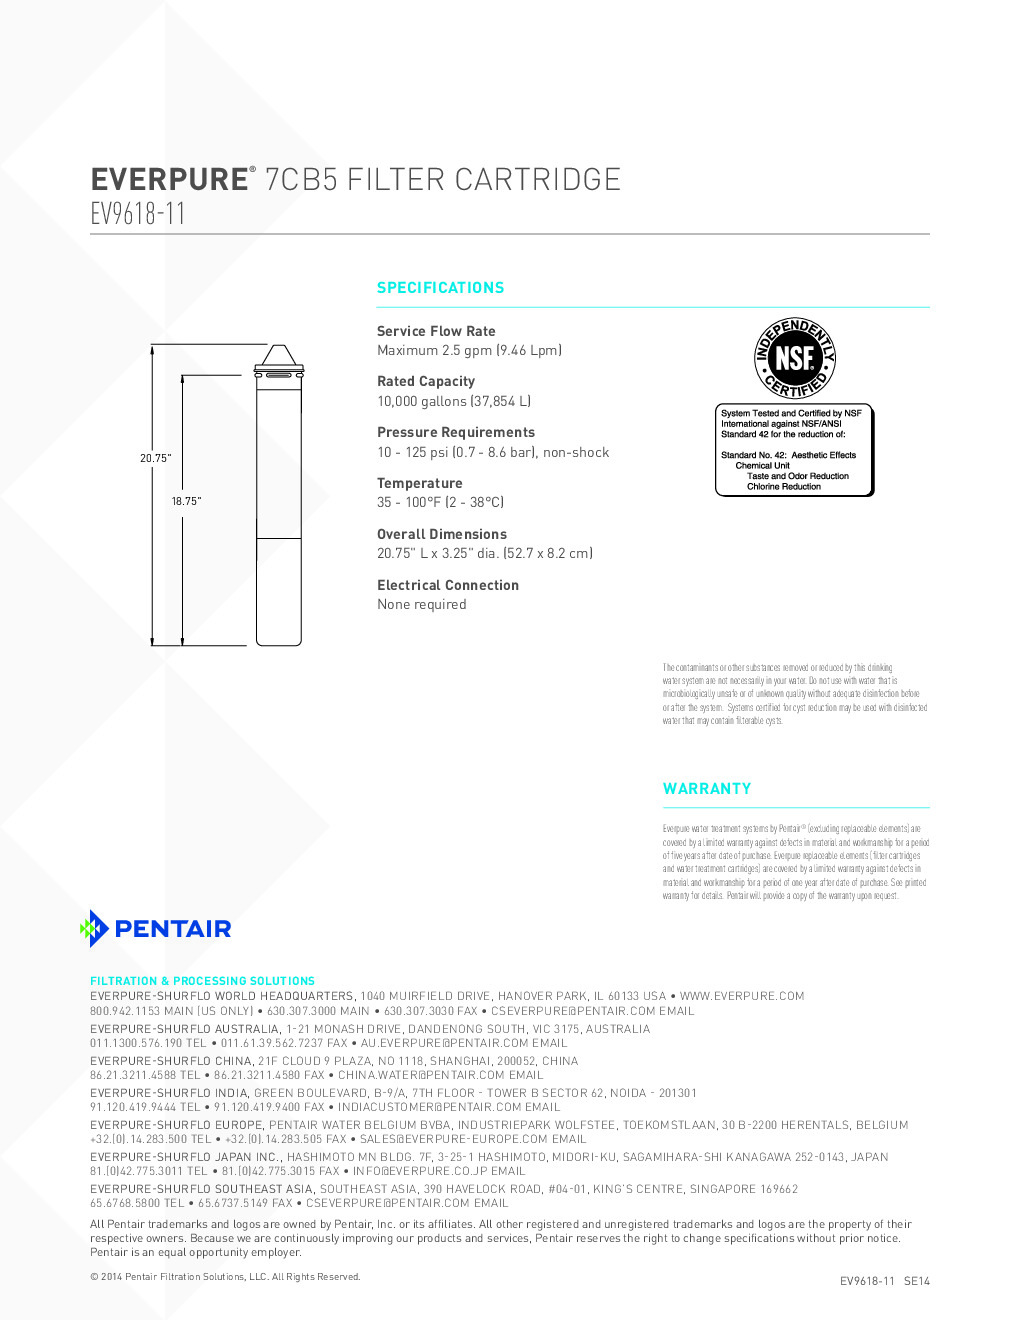 Everpure EV961811 Cartridge Water Filtration System